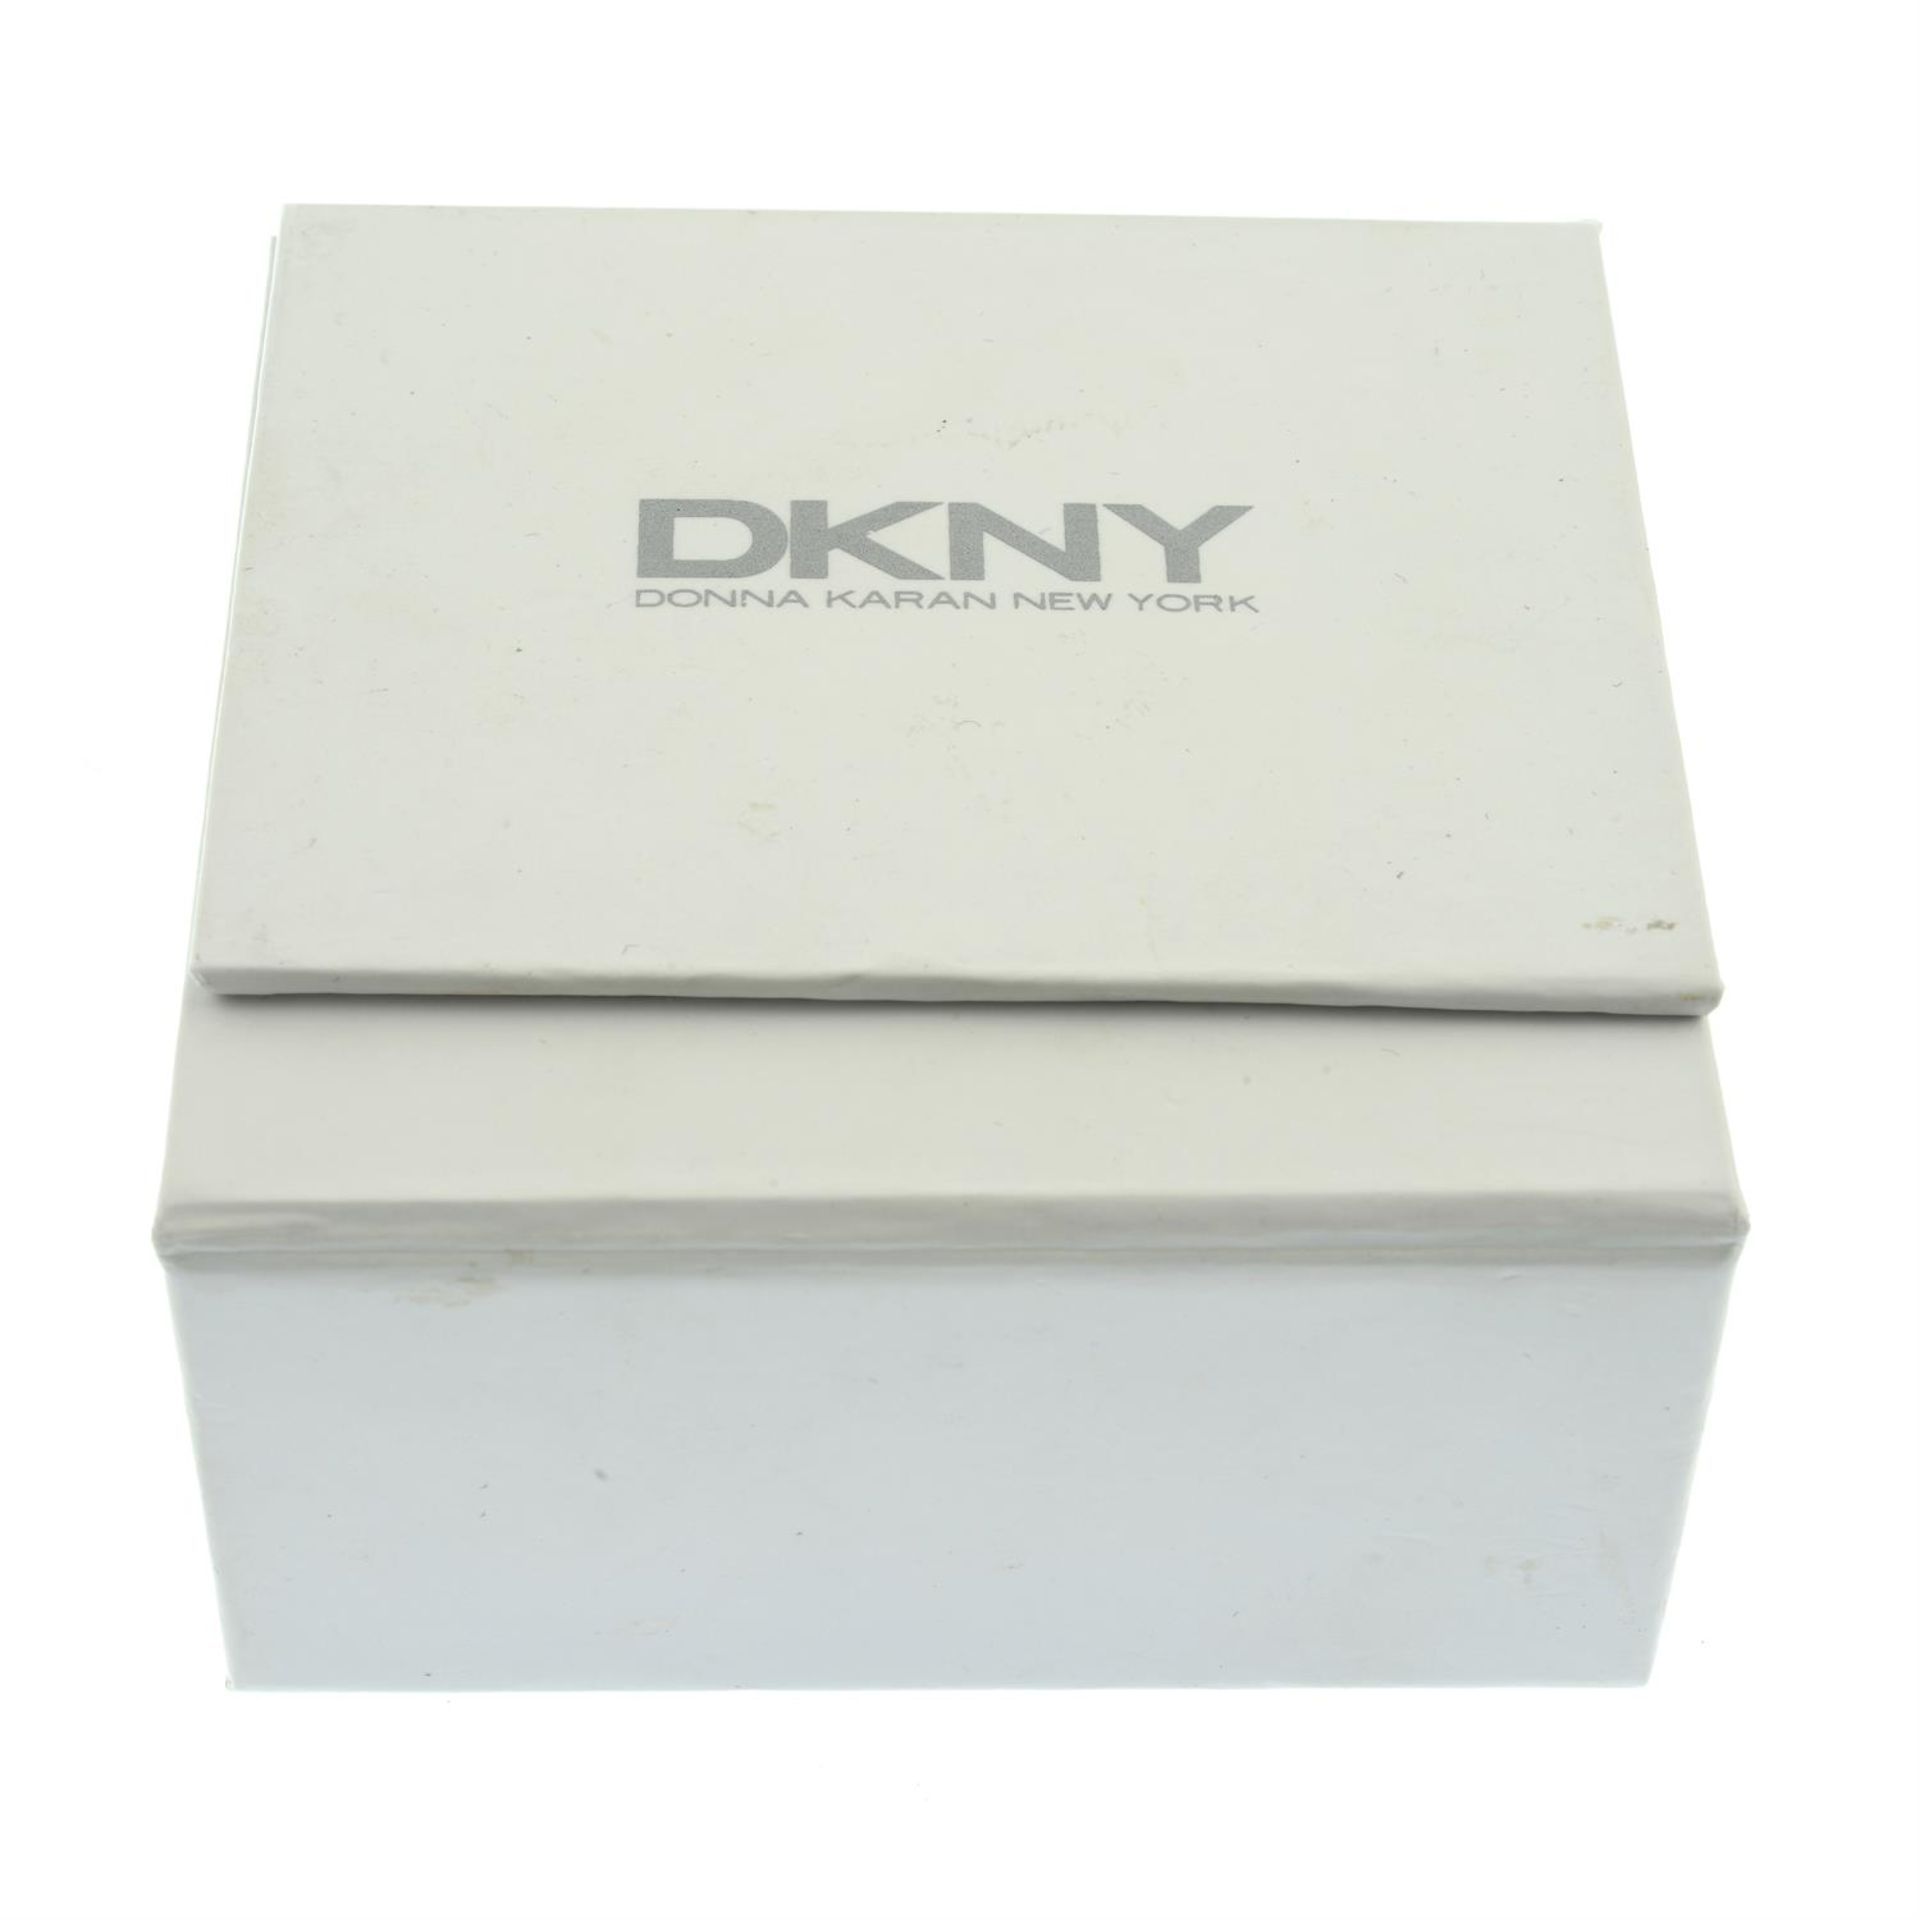 DKNY - a pair of drop earrings, bracelet and earring set. - Image 3 of 3